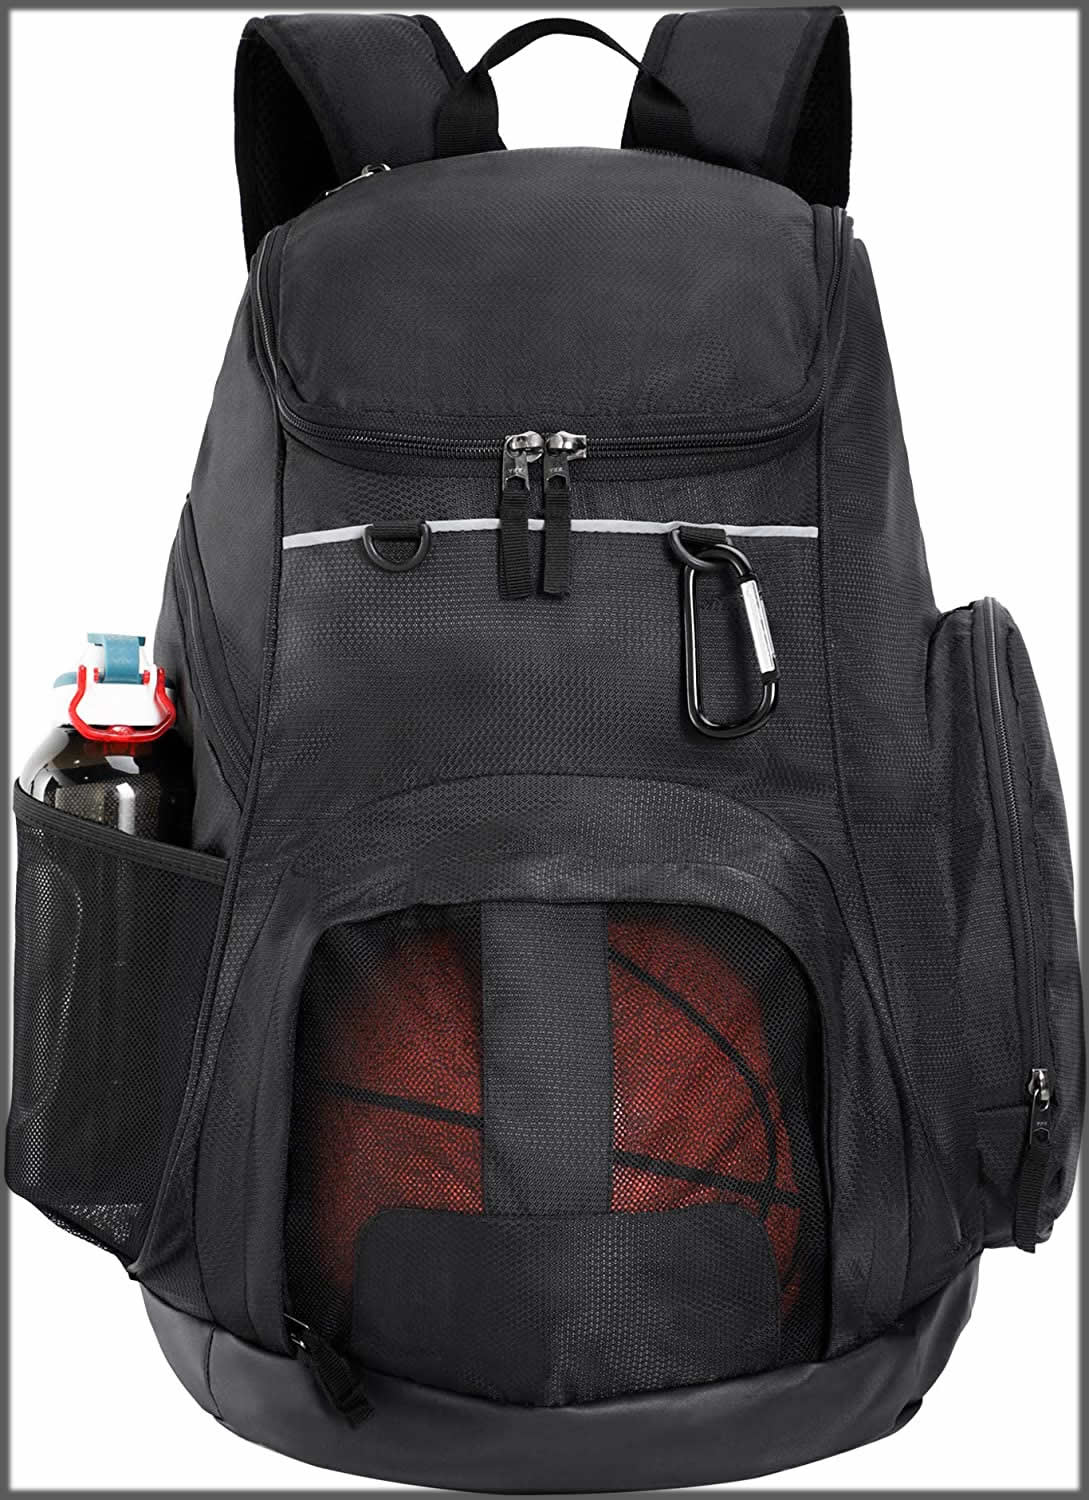 Black sports bag